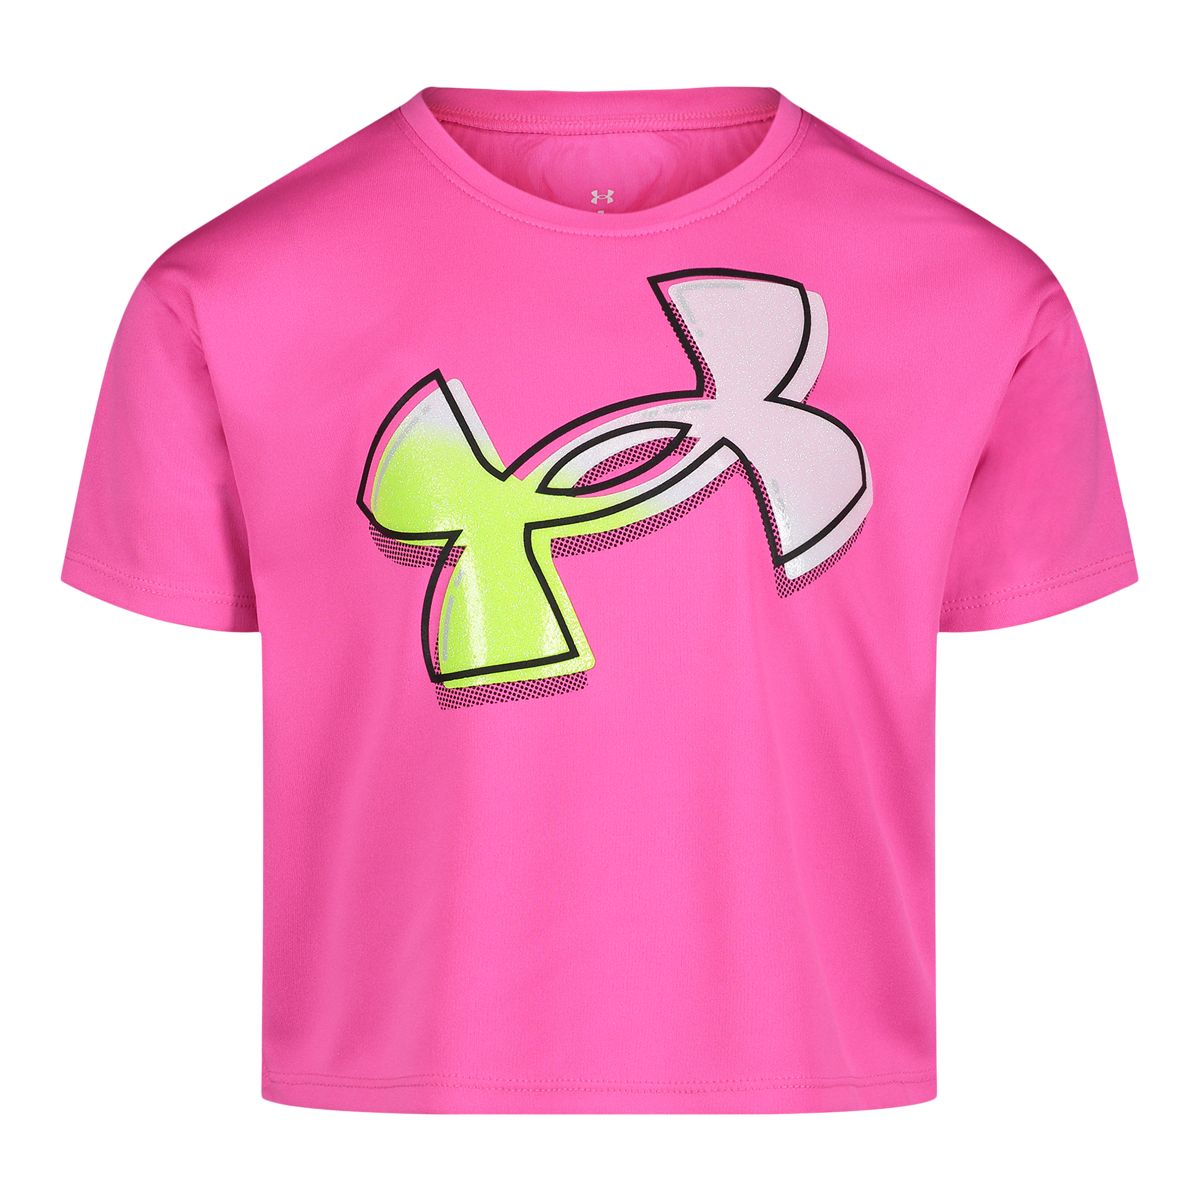 Under Armour Toddler Girls' 4-6X Gradient Logo T Shirt